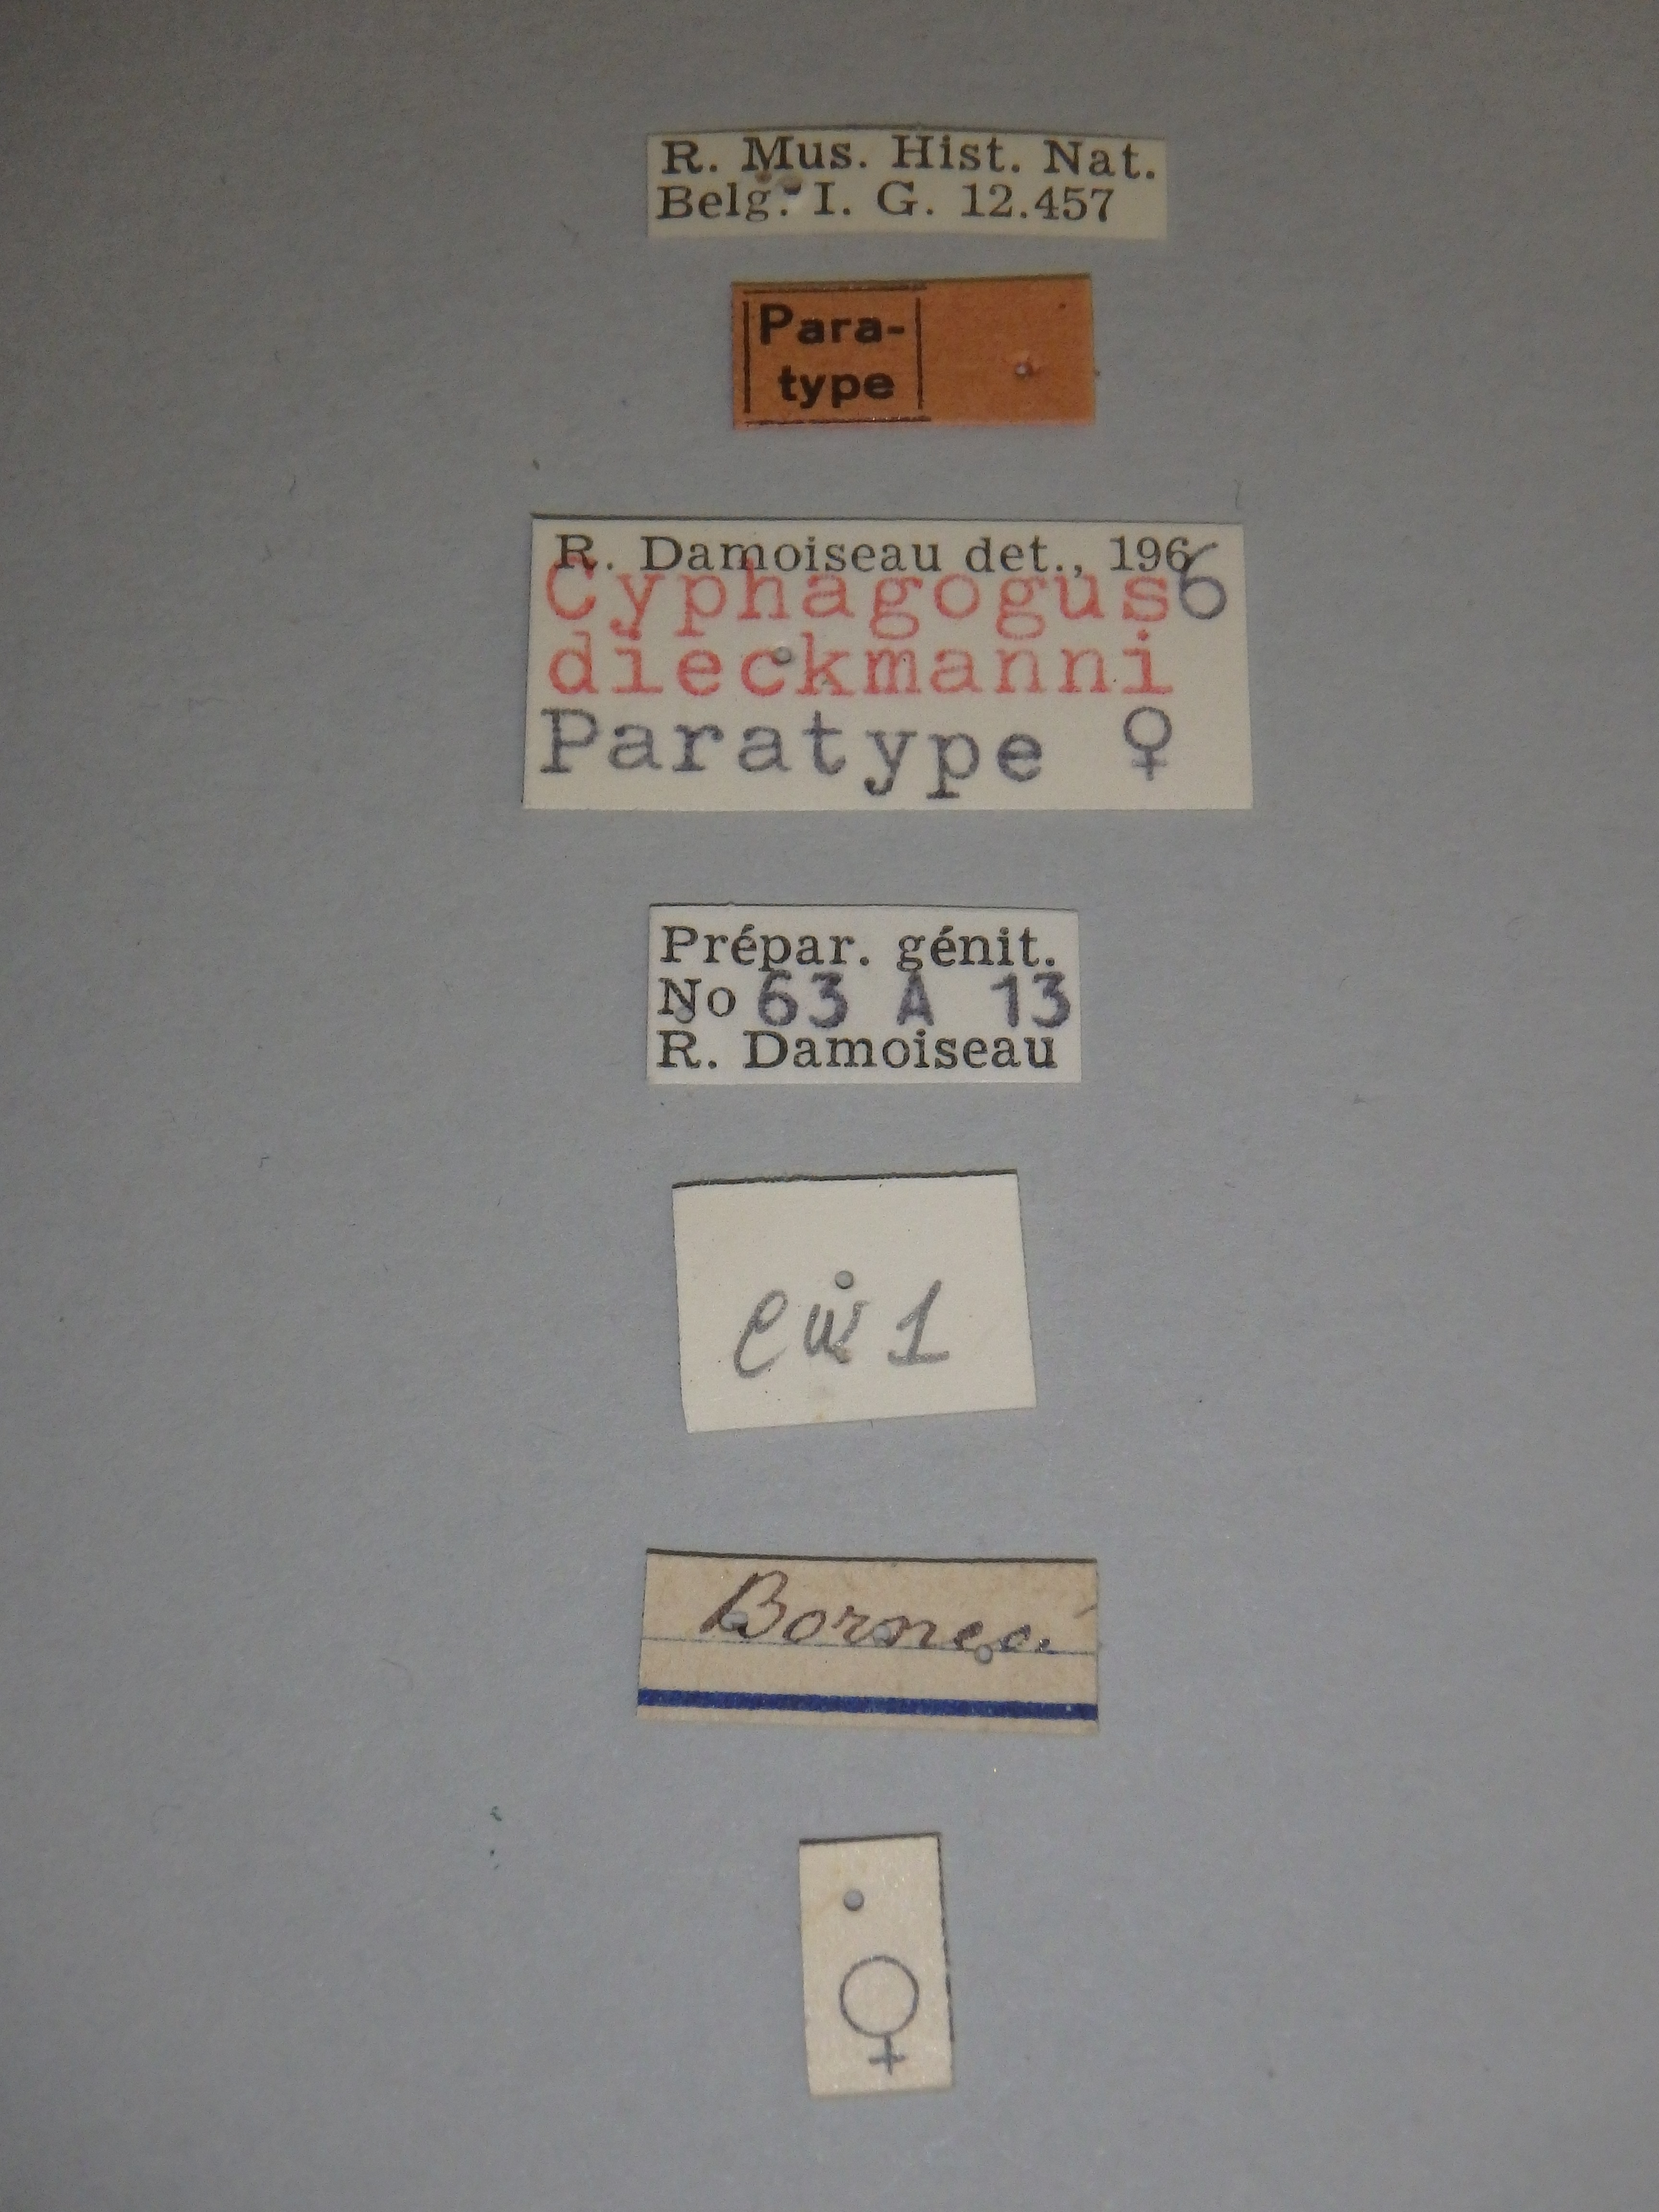 Cyphagogus dieckmanni pt Labels.jpg